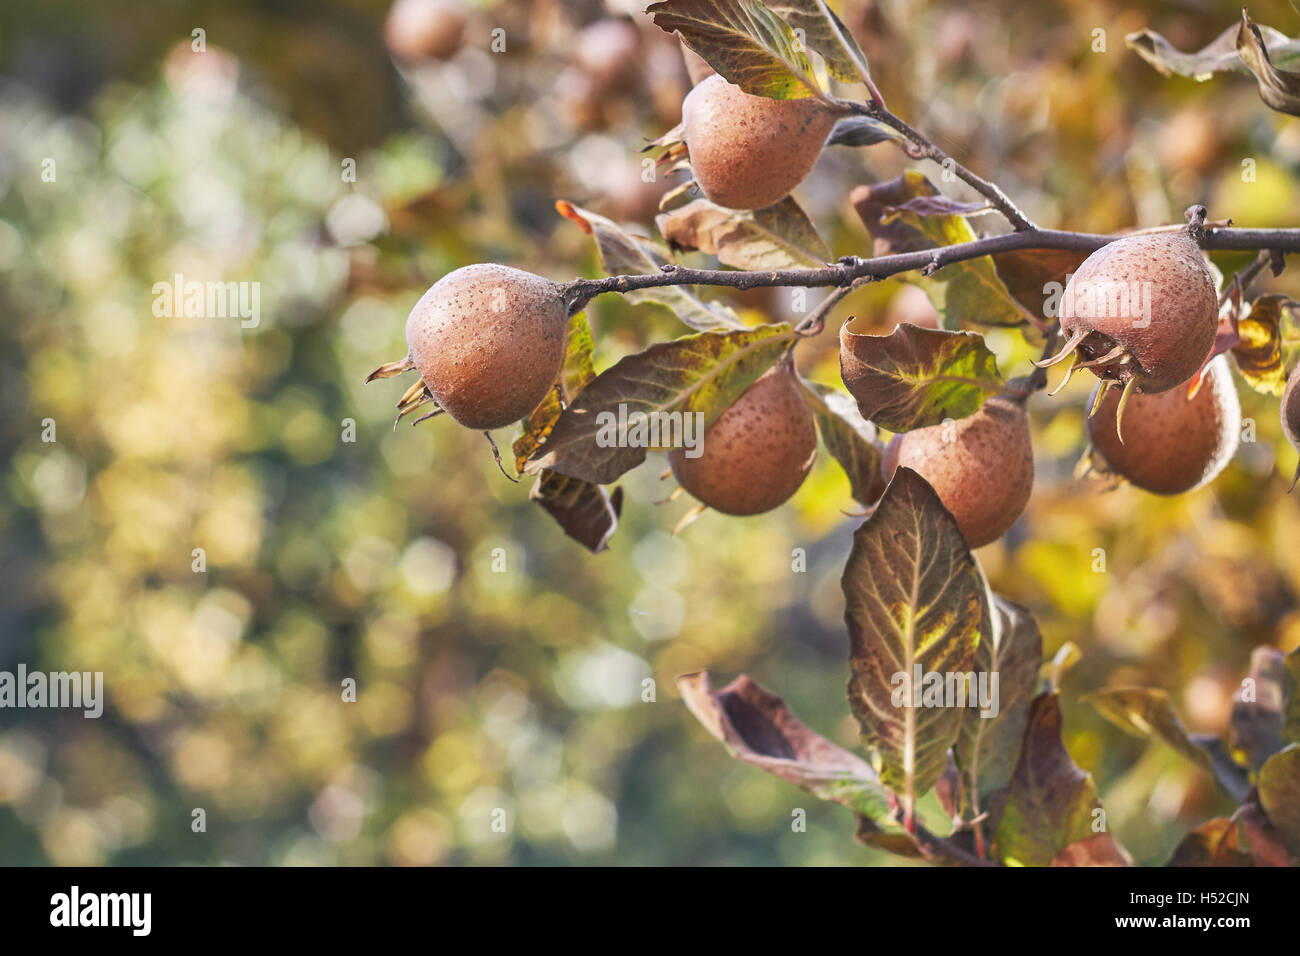 Common medlar fruit growing on tree. Copy space Stock Photo